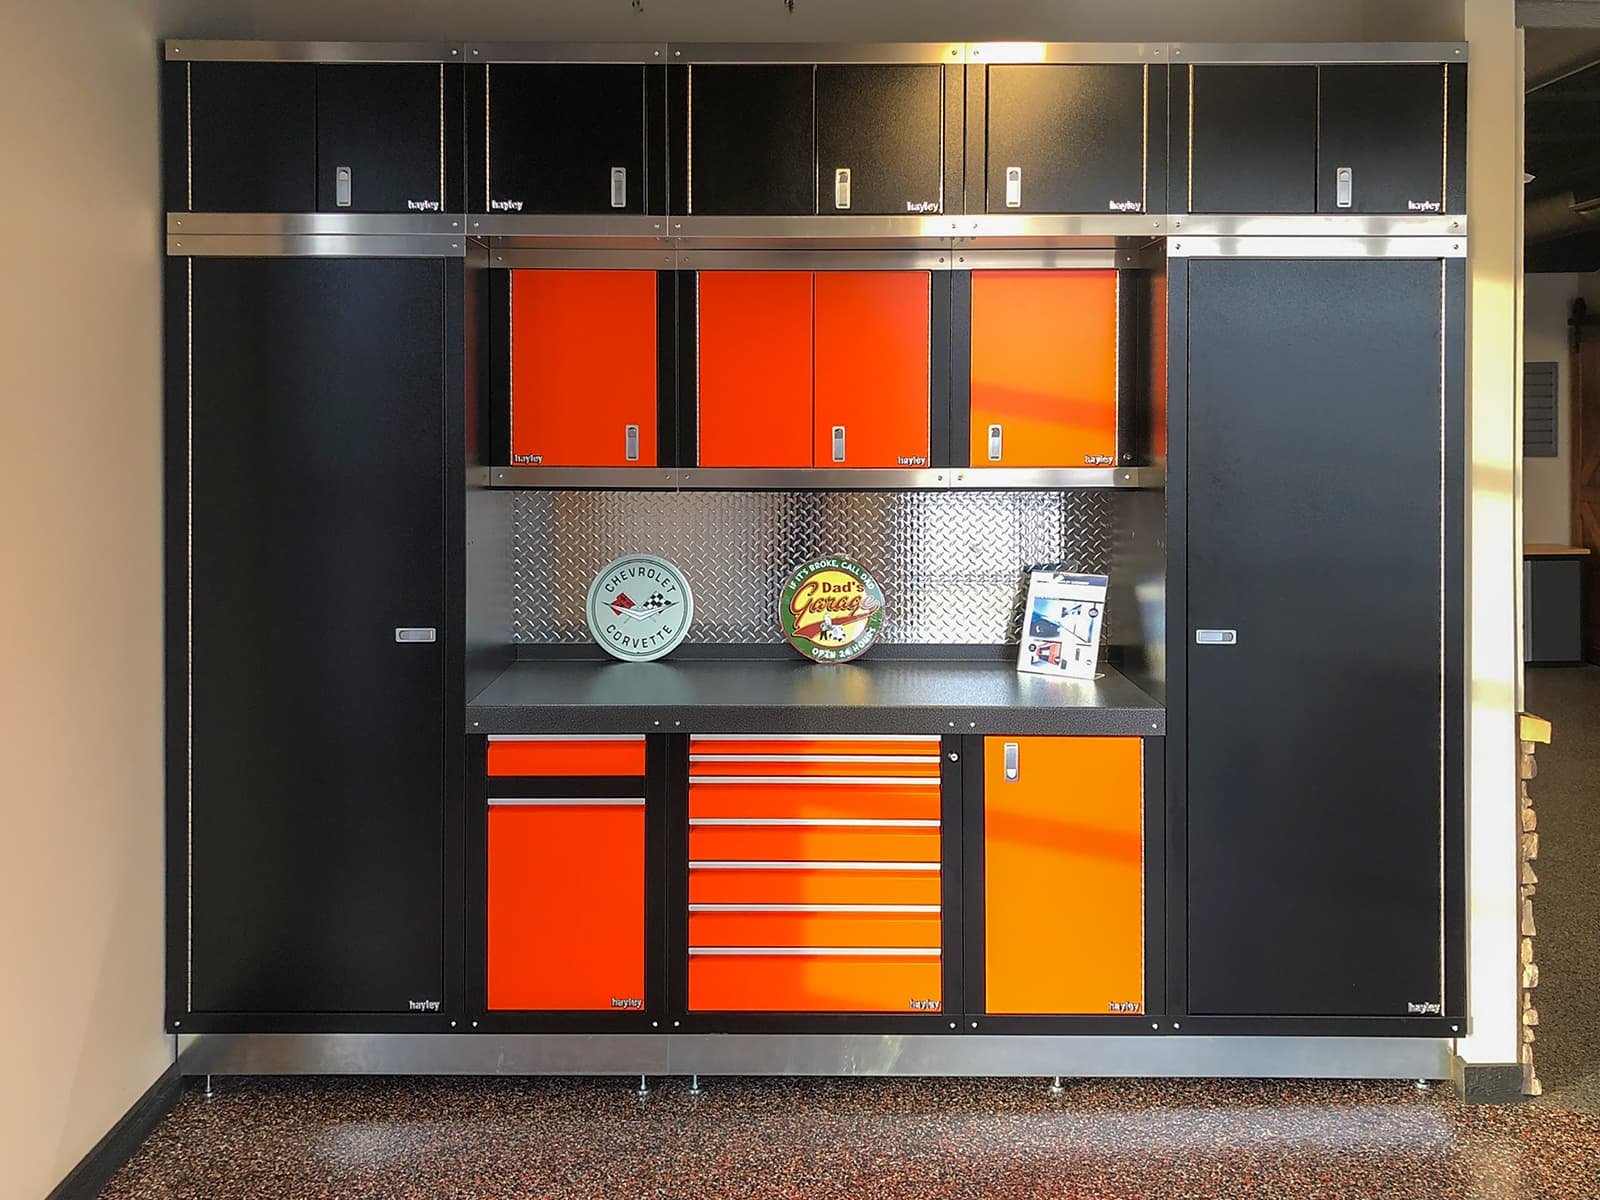 xgarage_living_sioux_falls_showroom-black-orange-cabinets.jpg.pagespeed.ic.k99C4sG8k9